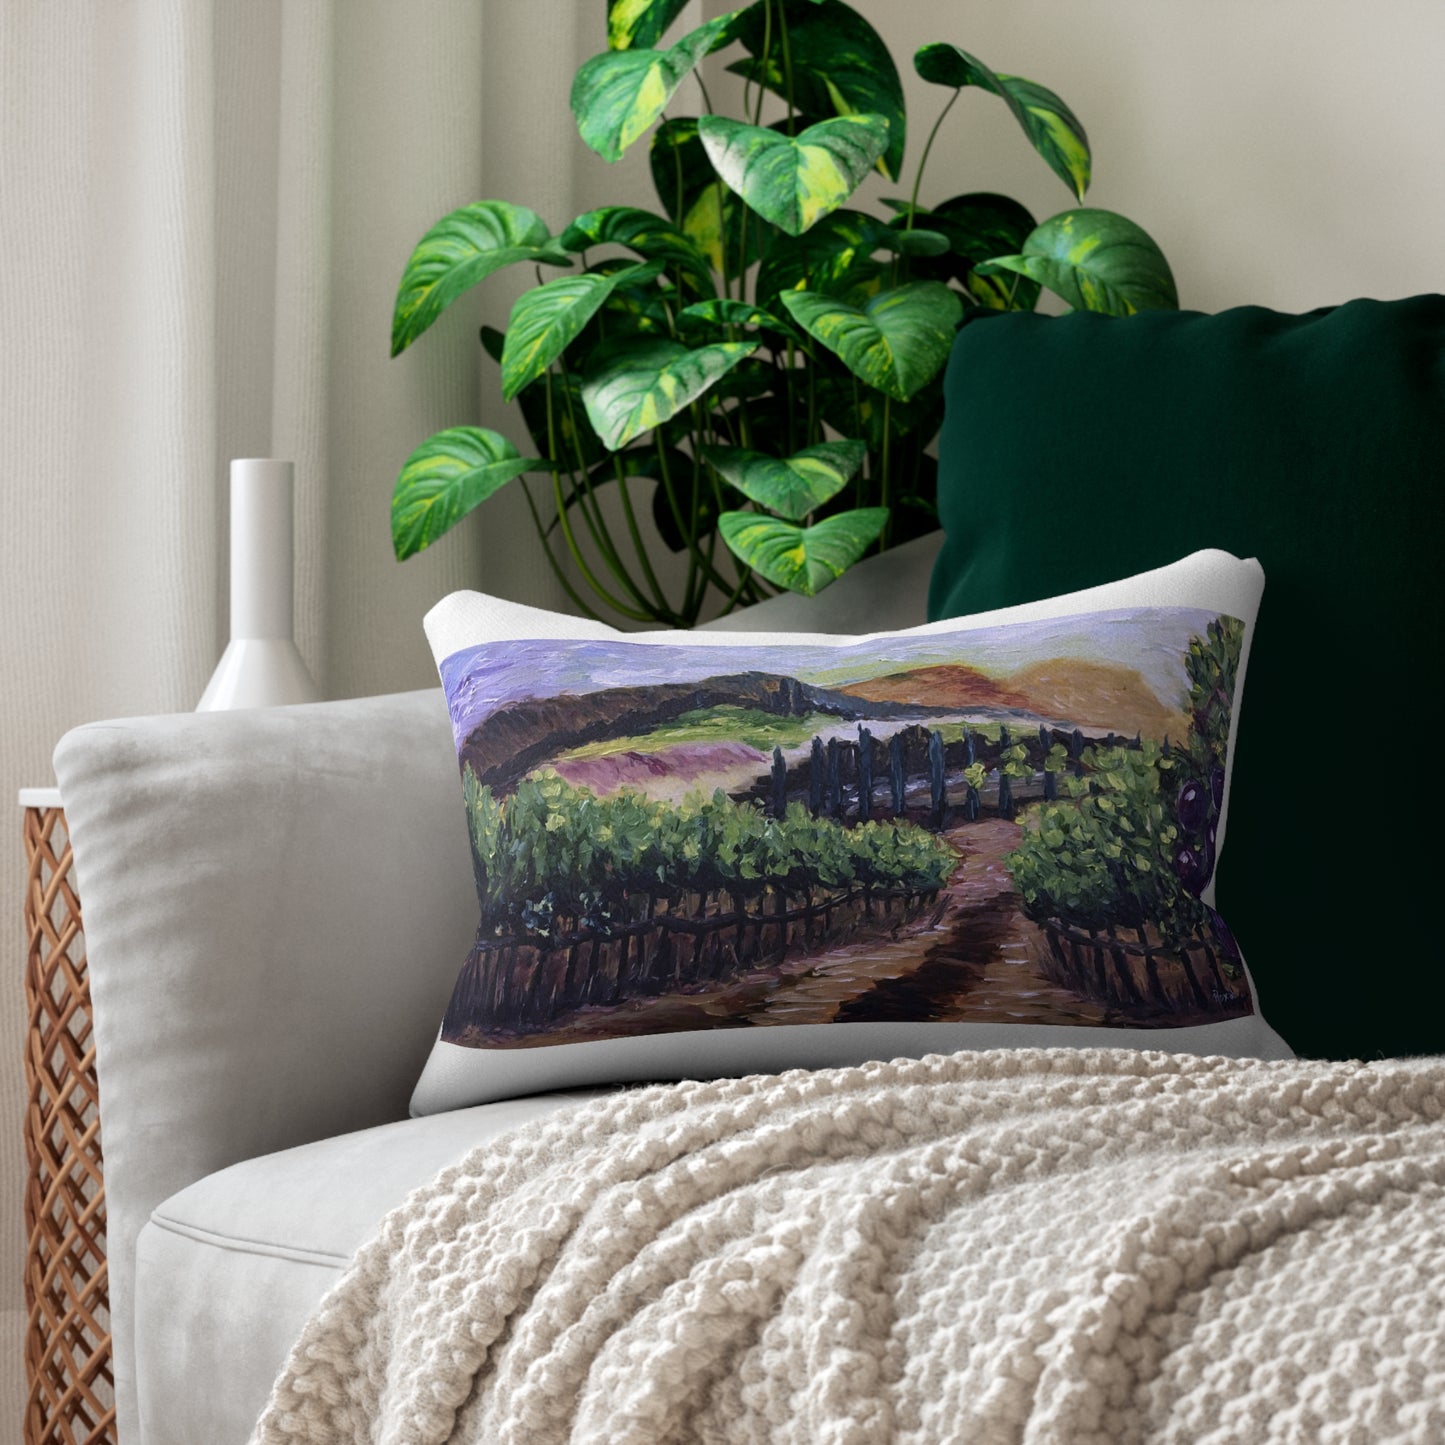 Temecula Lumbar Pillow featuring "Afternoon Vines" painting and "Temecula"